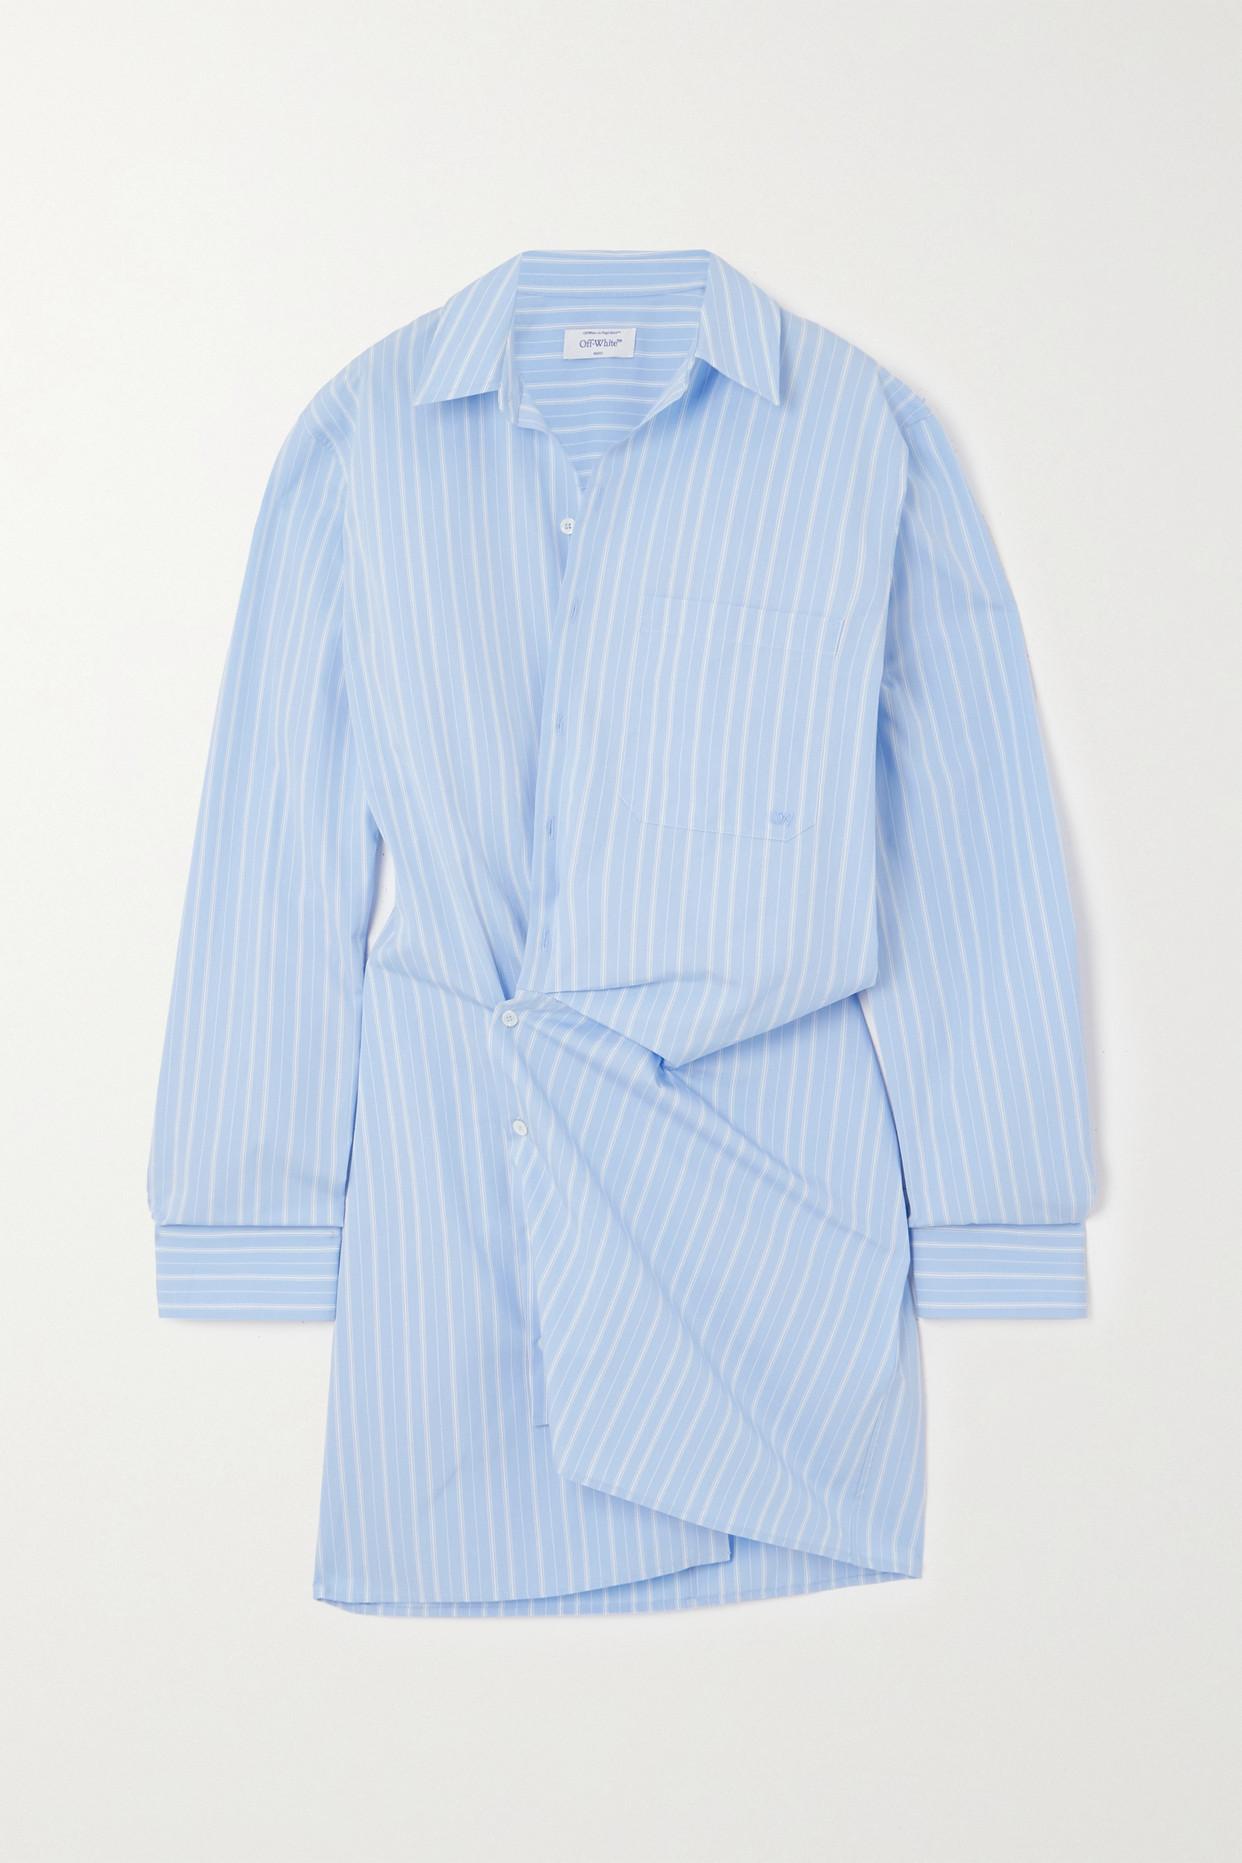 Off-White c/o Virgil Abloh Striped Cotton-poplin Mini Shirt Dress in Blue |  Lyst